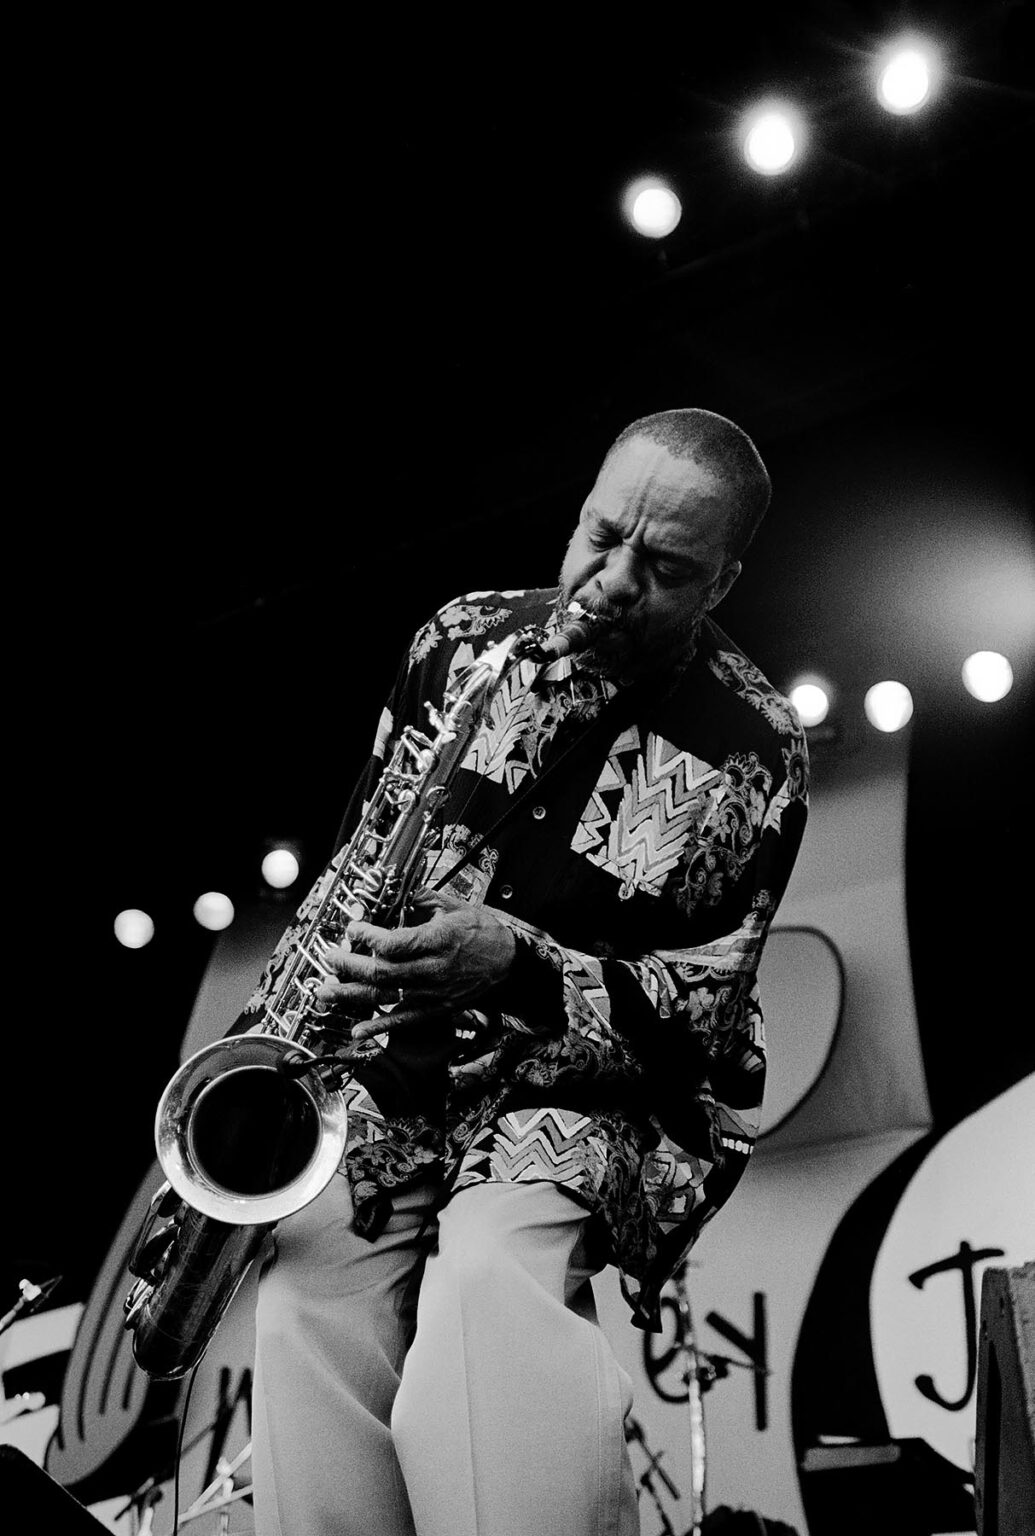 GROVER WASHINGTON plays the saxaphone at the MONTEREY JAZZ FESTIVAL - MONTEREY, CALIFORNIA